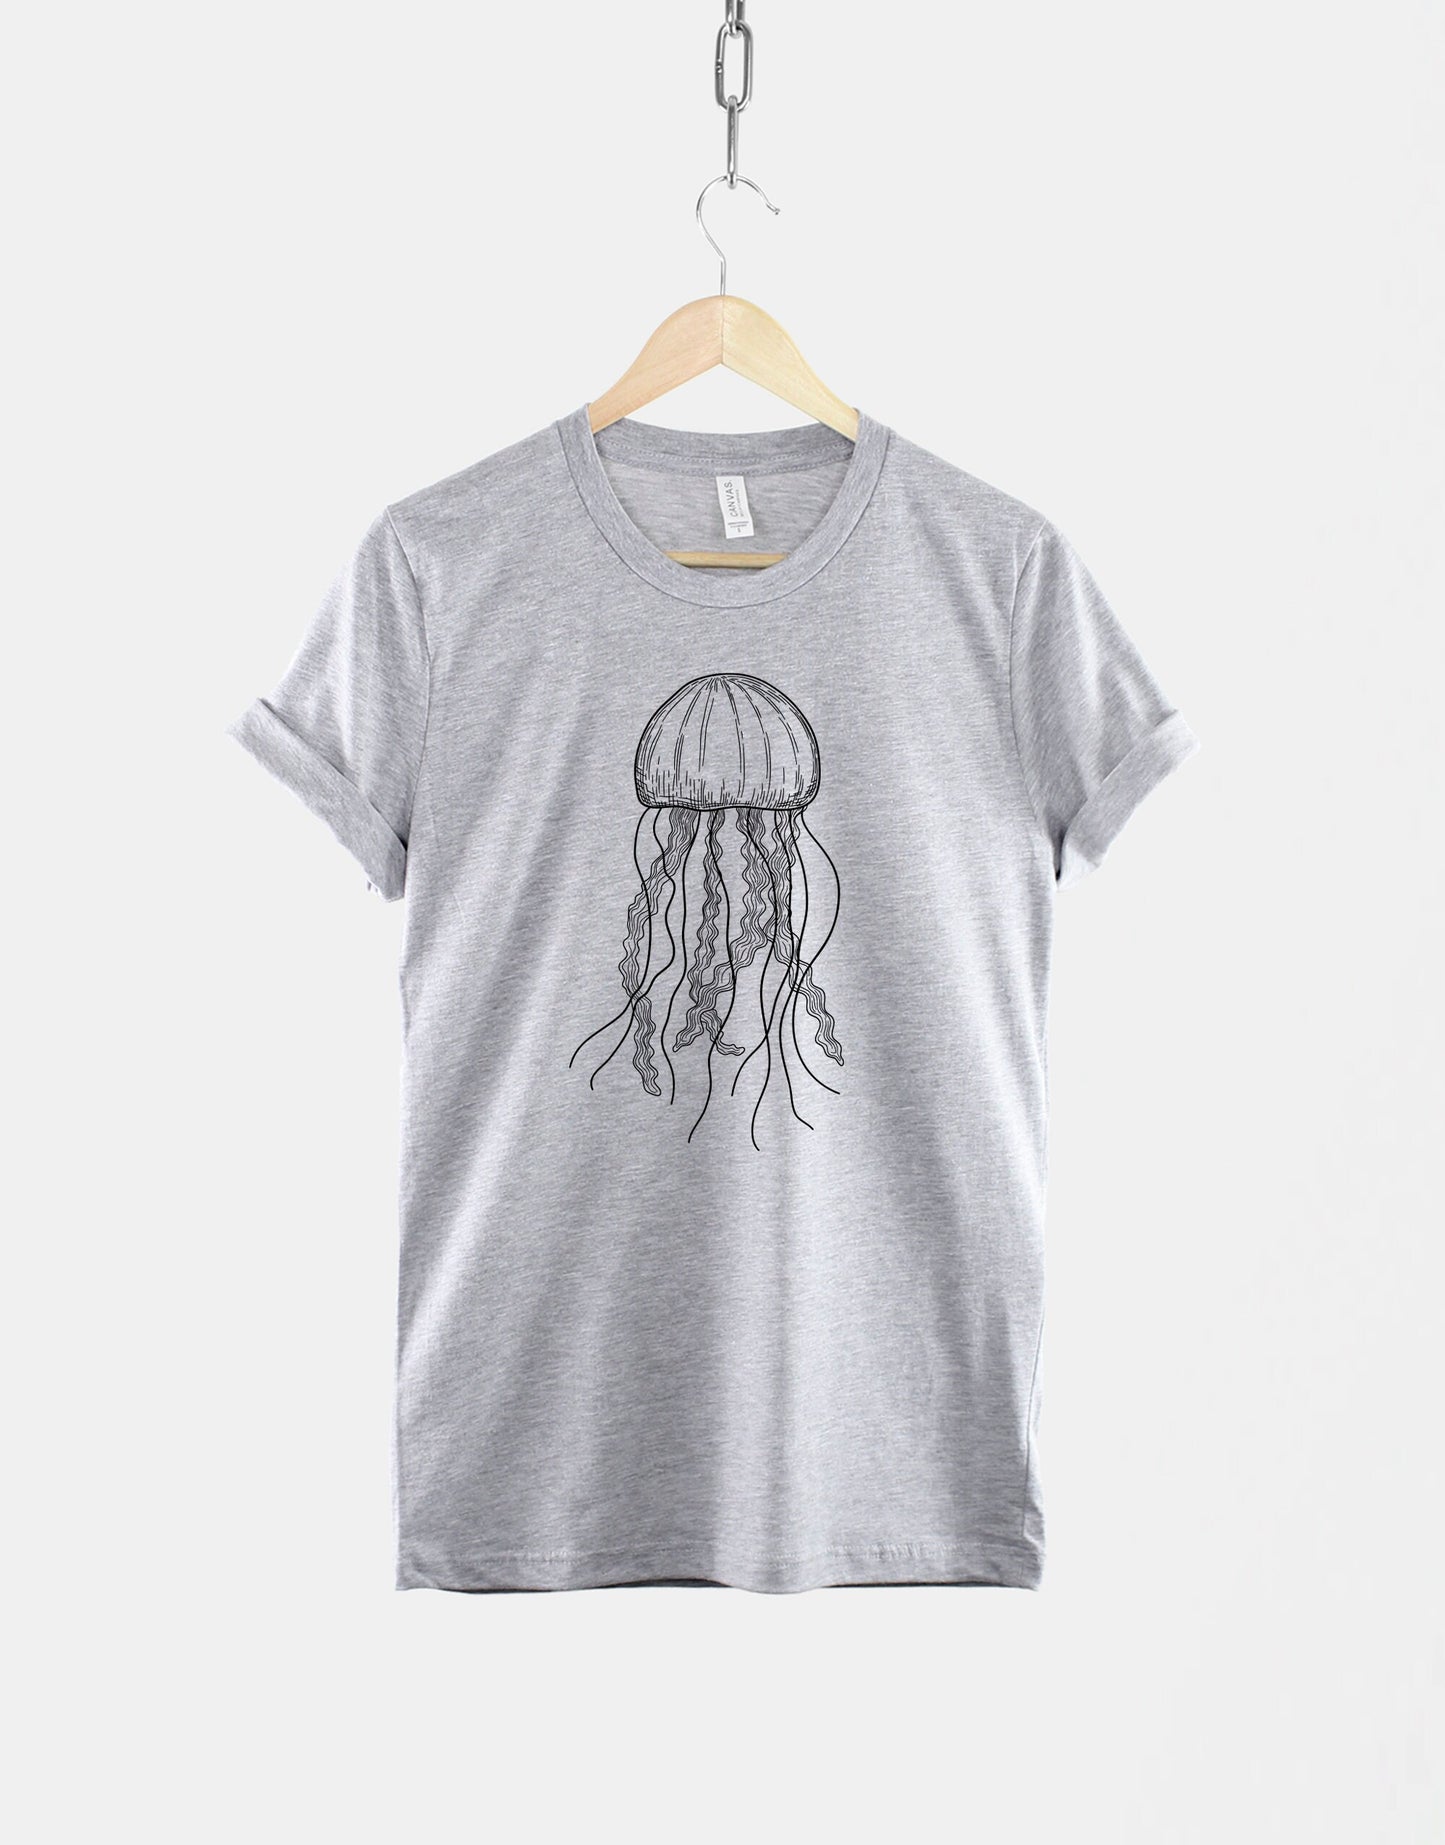 Jellyfish T-Shirt - Seaside Nautical Shirt - Beach T-Shirt - Summer T-Shirt - Marine Print TShirt